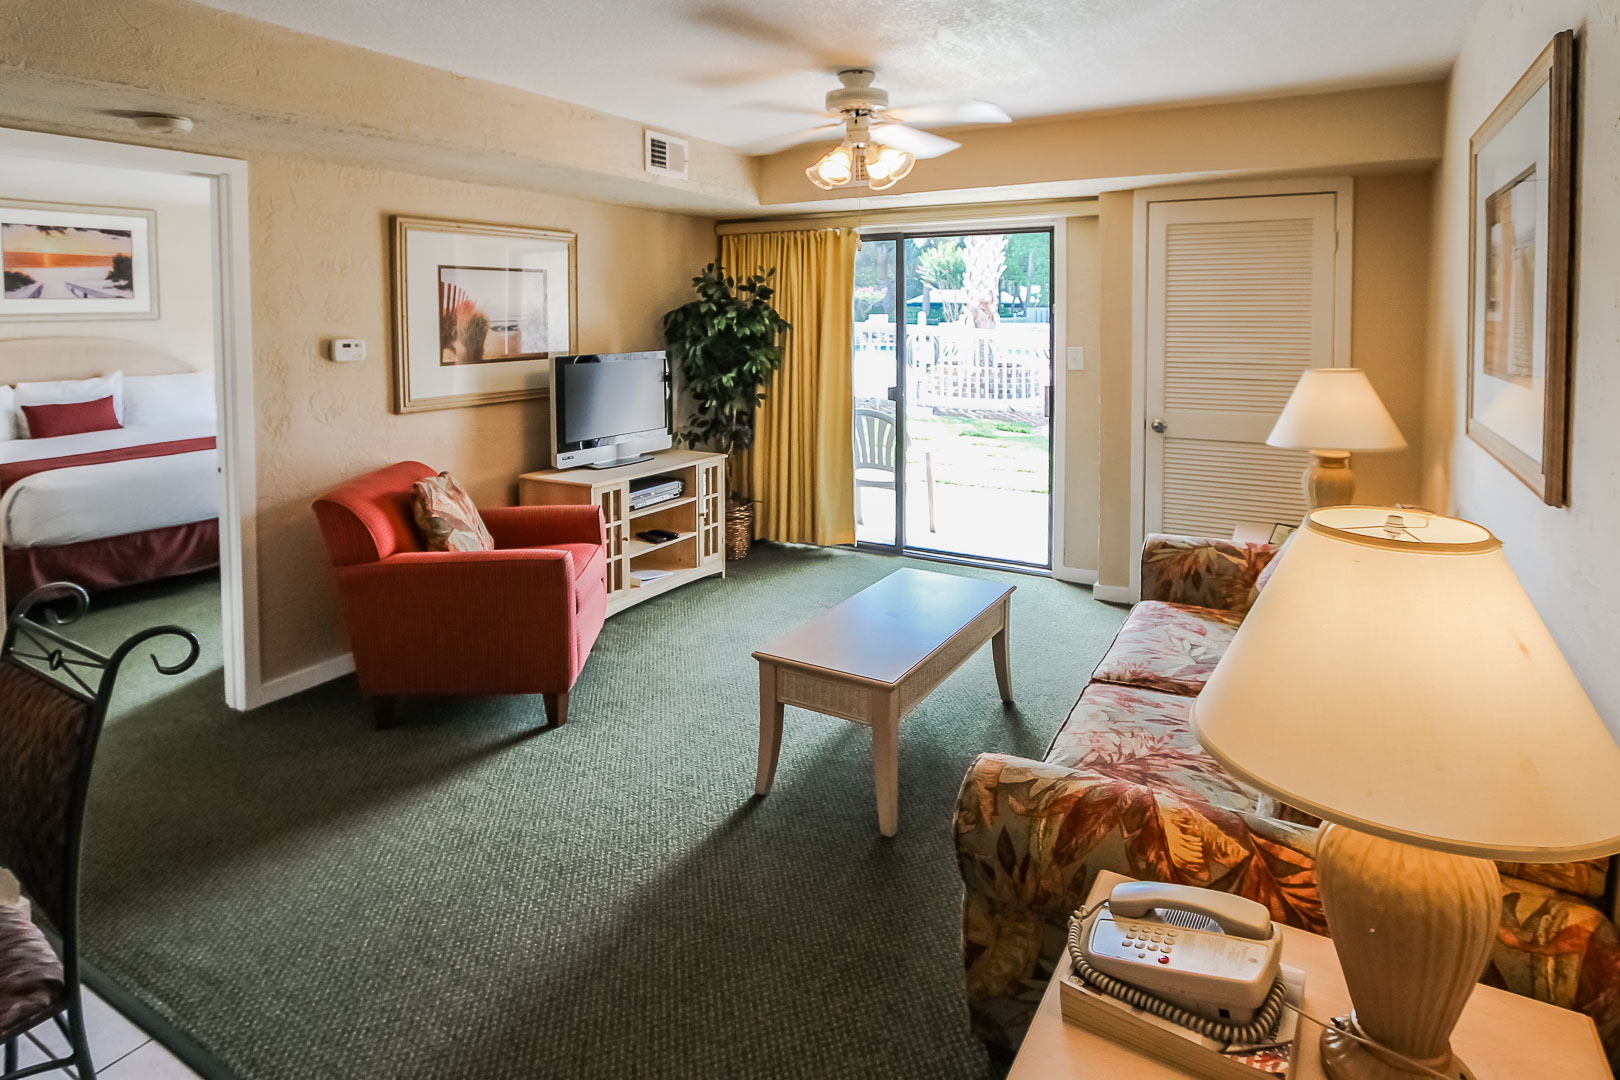 A spacious living room area at VRI's Players Club Resort in Hilton Head Island, South Carolina.